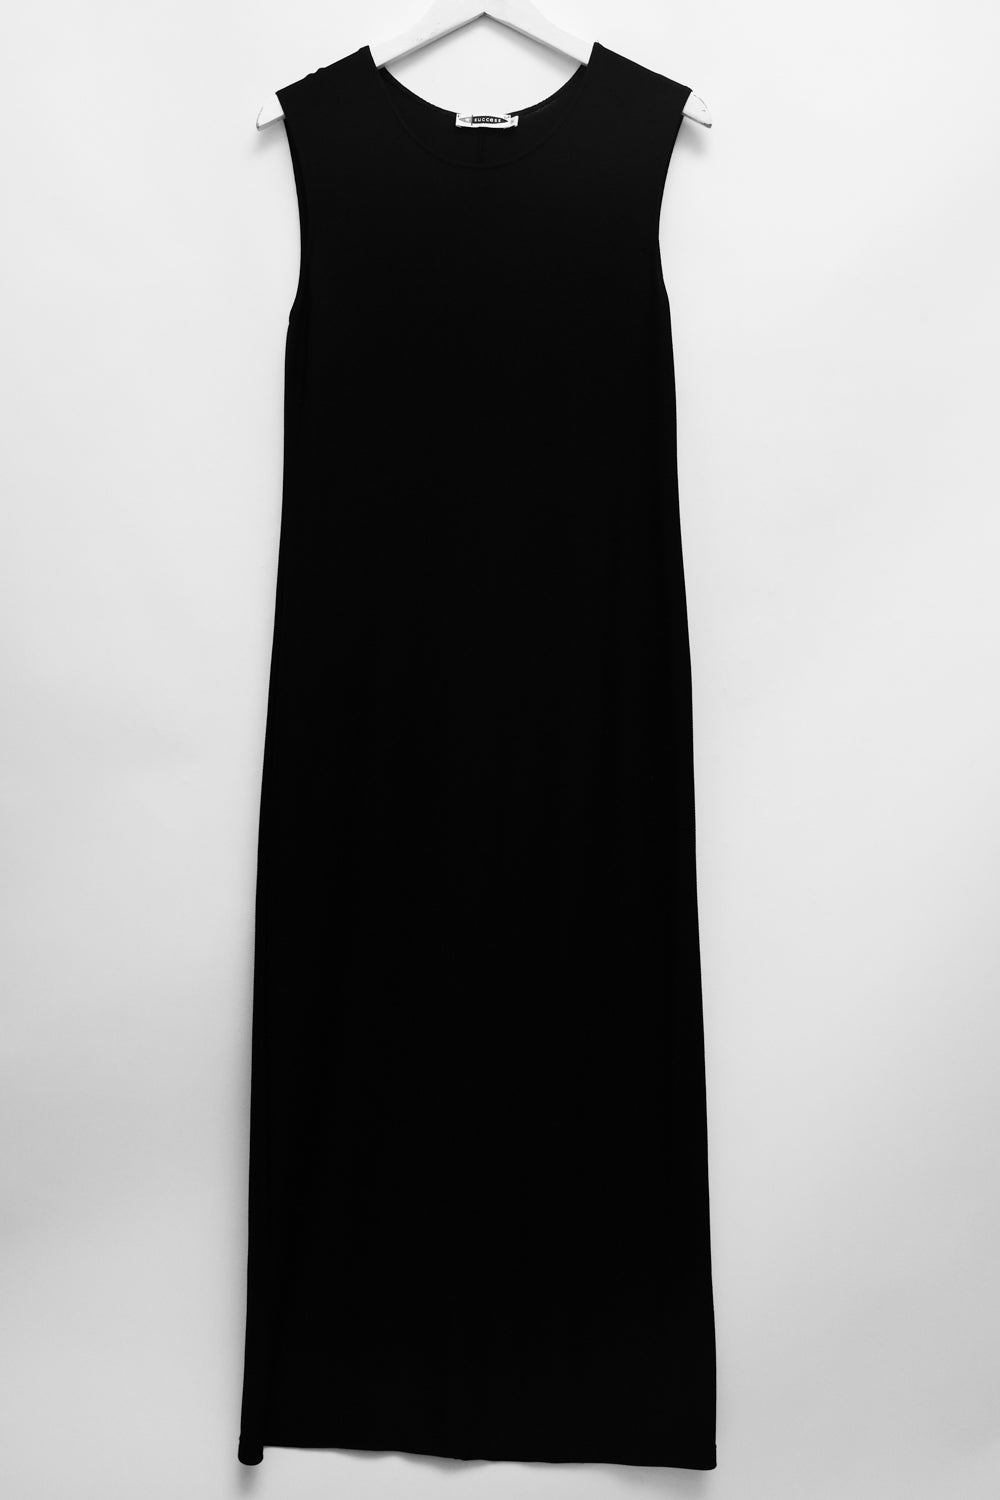 BLACK STRAIGHT MAXI VINTAGE DRESS